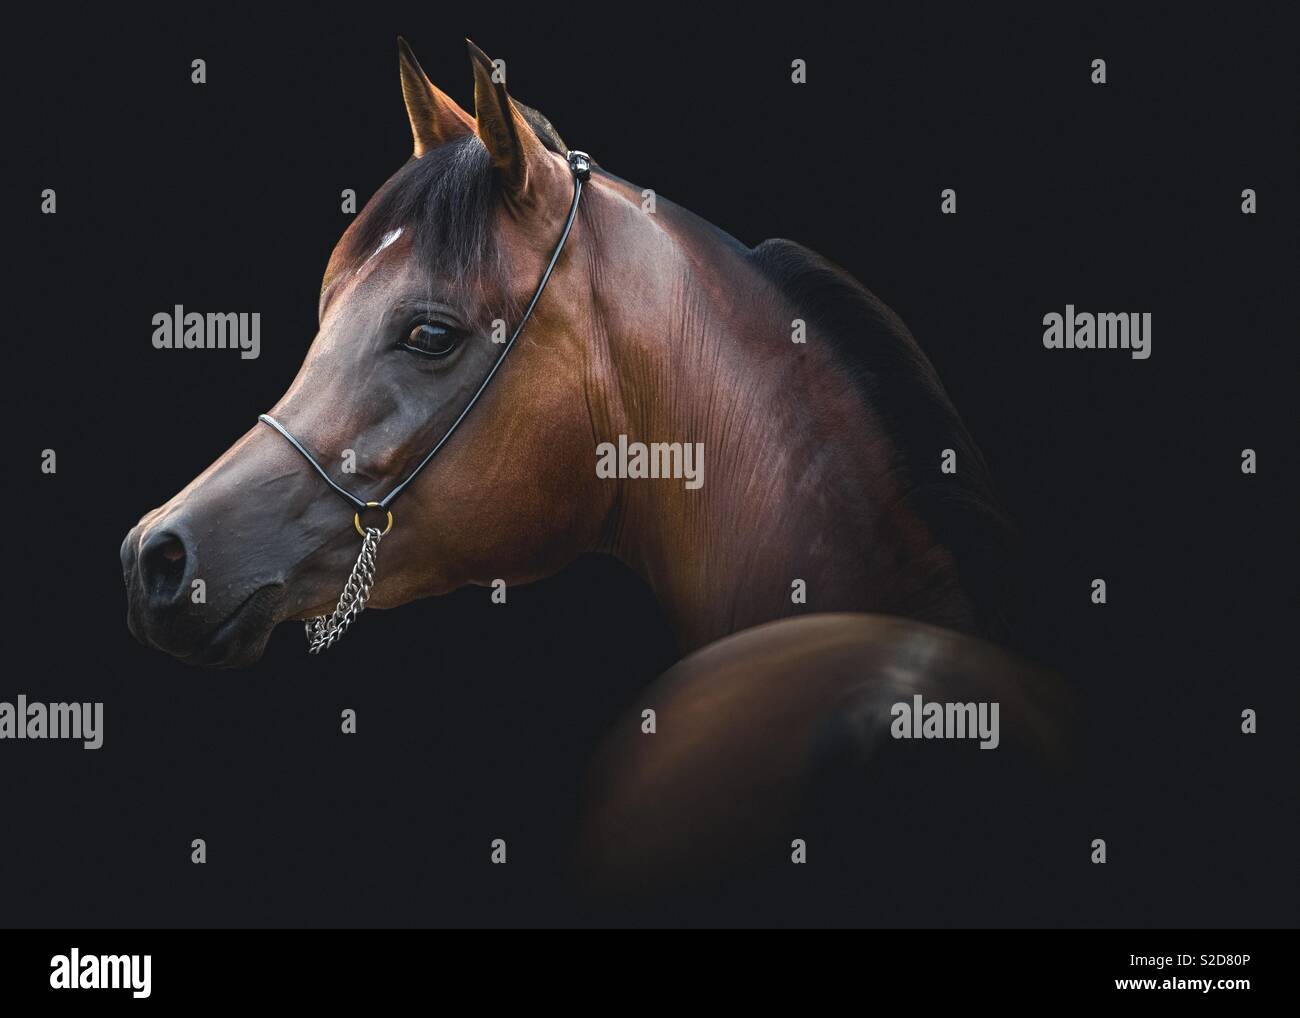 Horse Photography Stock Photo